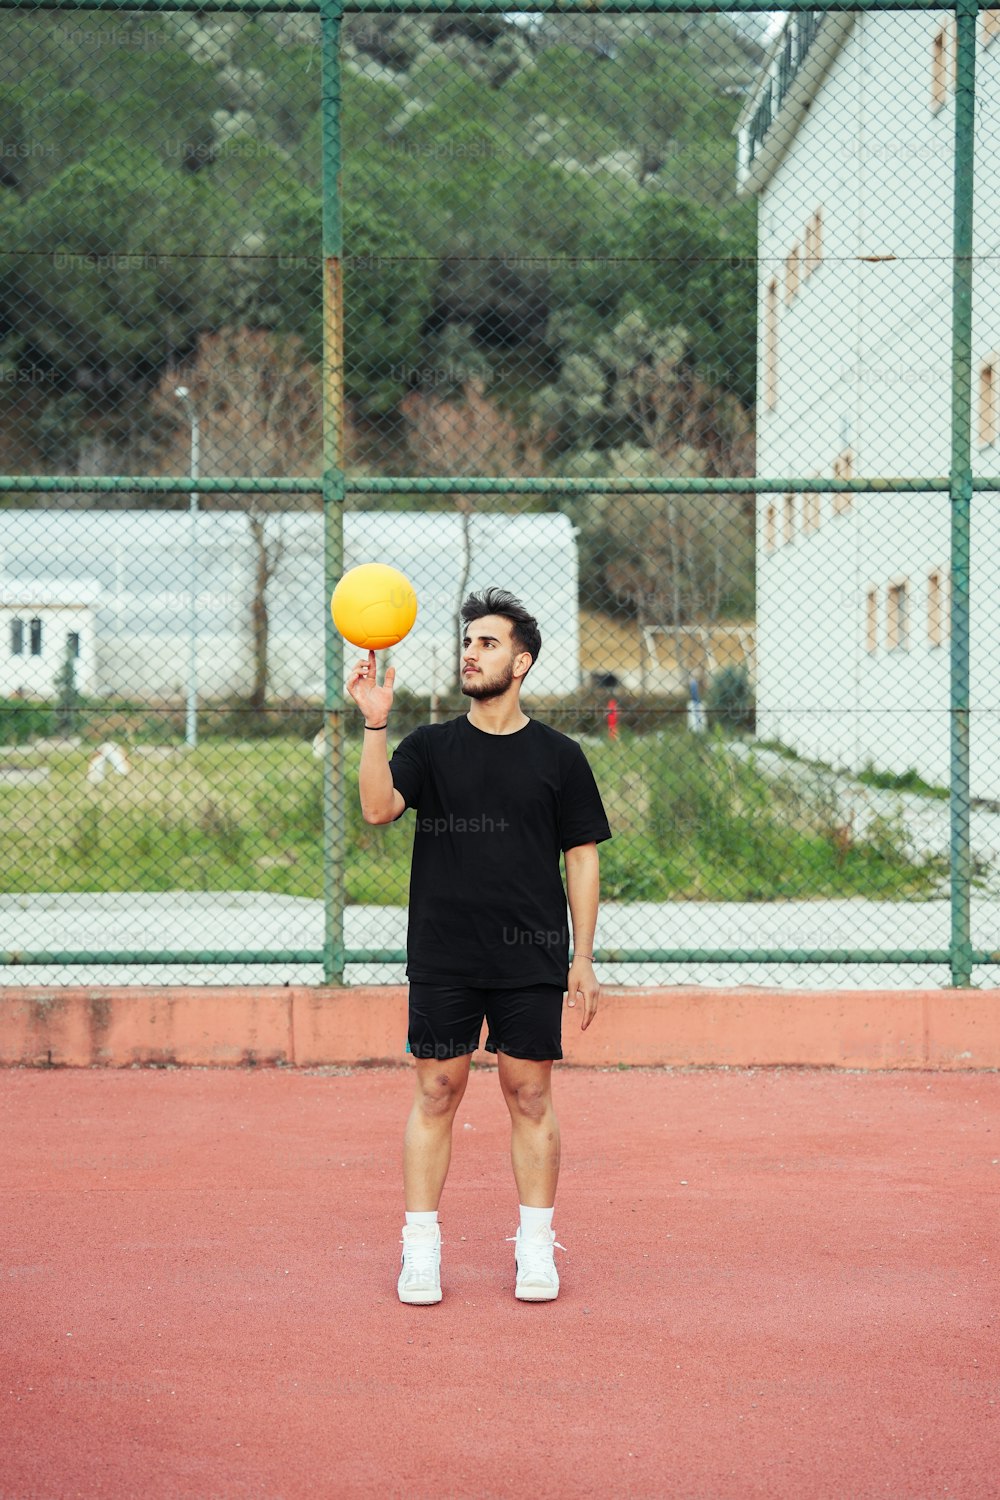 a man standing on a tennis court holding a yellow ball